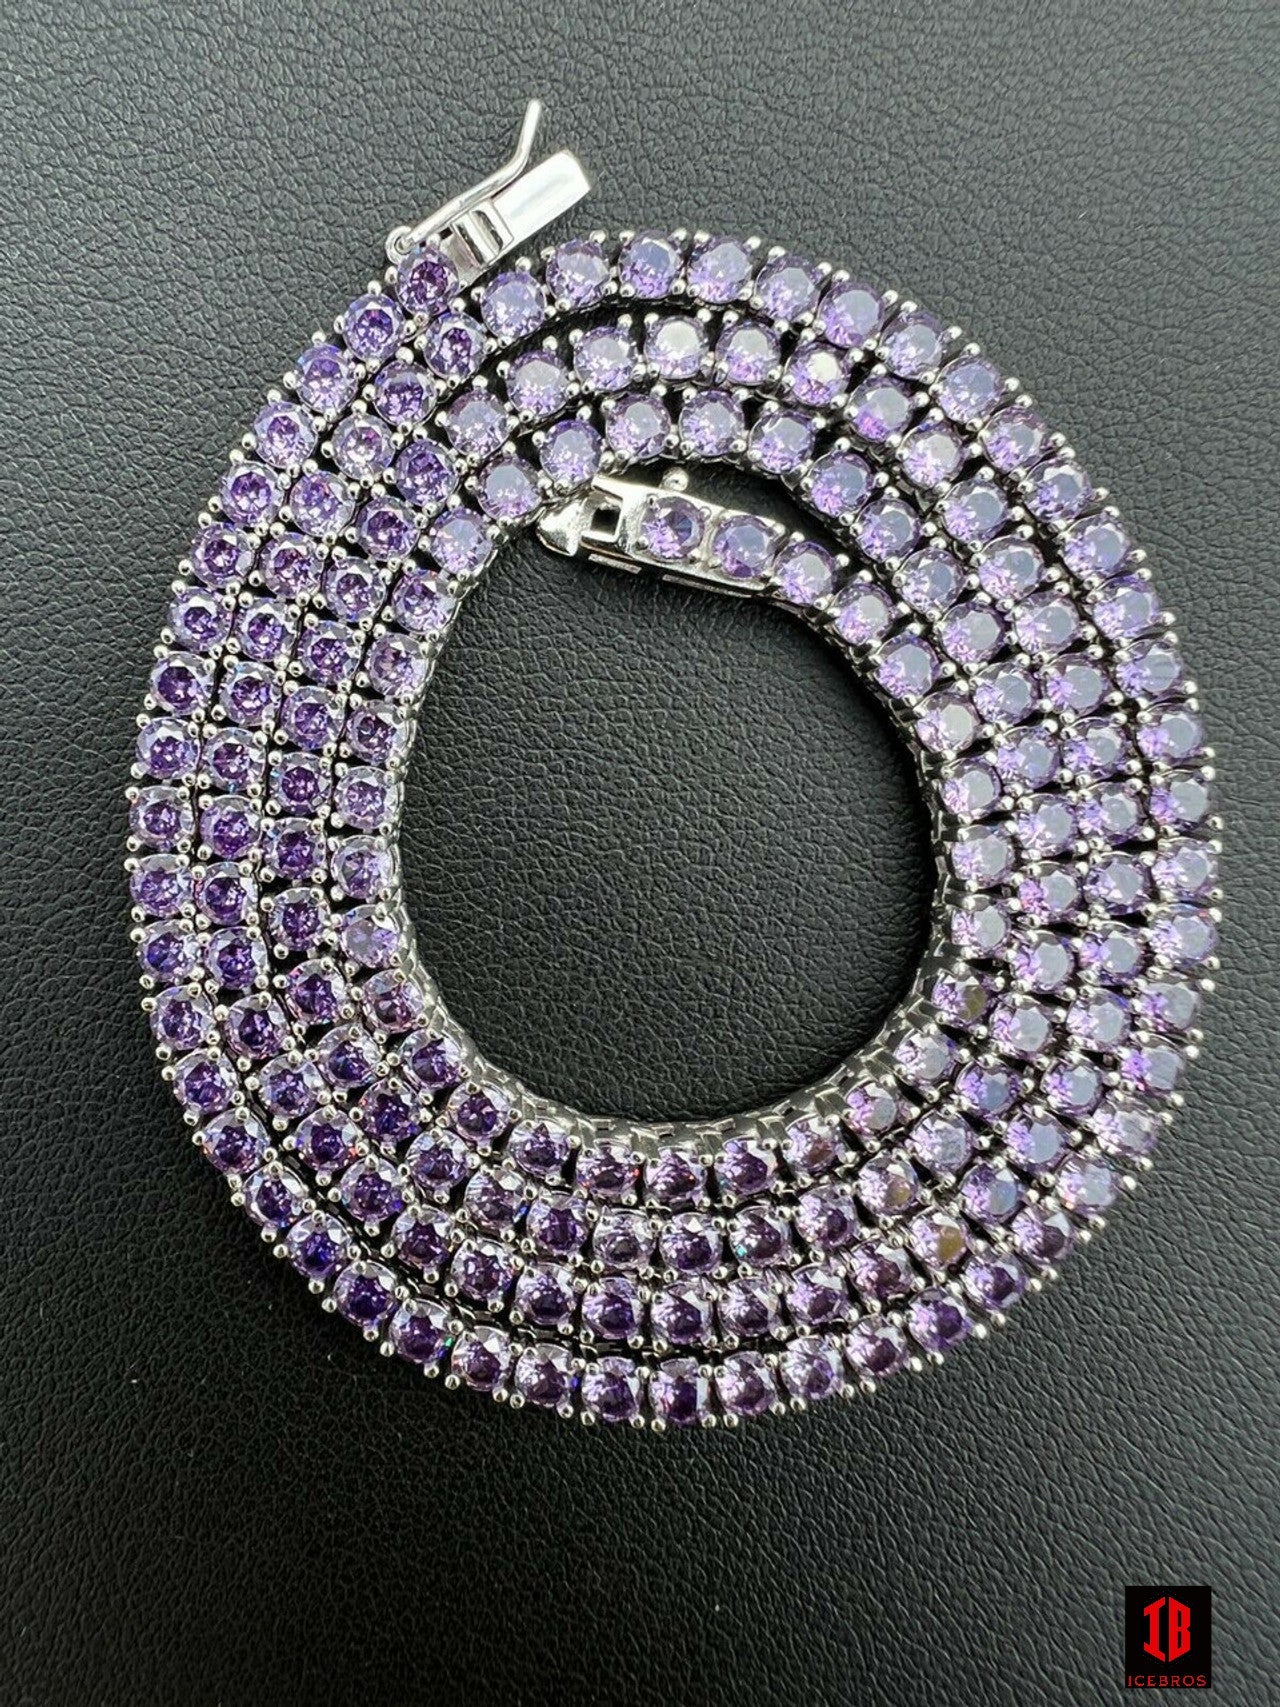 Tennis Chain Fine 925 Sterling Silver Purple Amethyst Diamond Necklace 16-28"